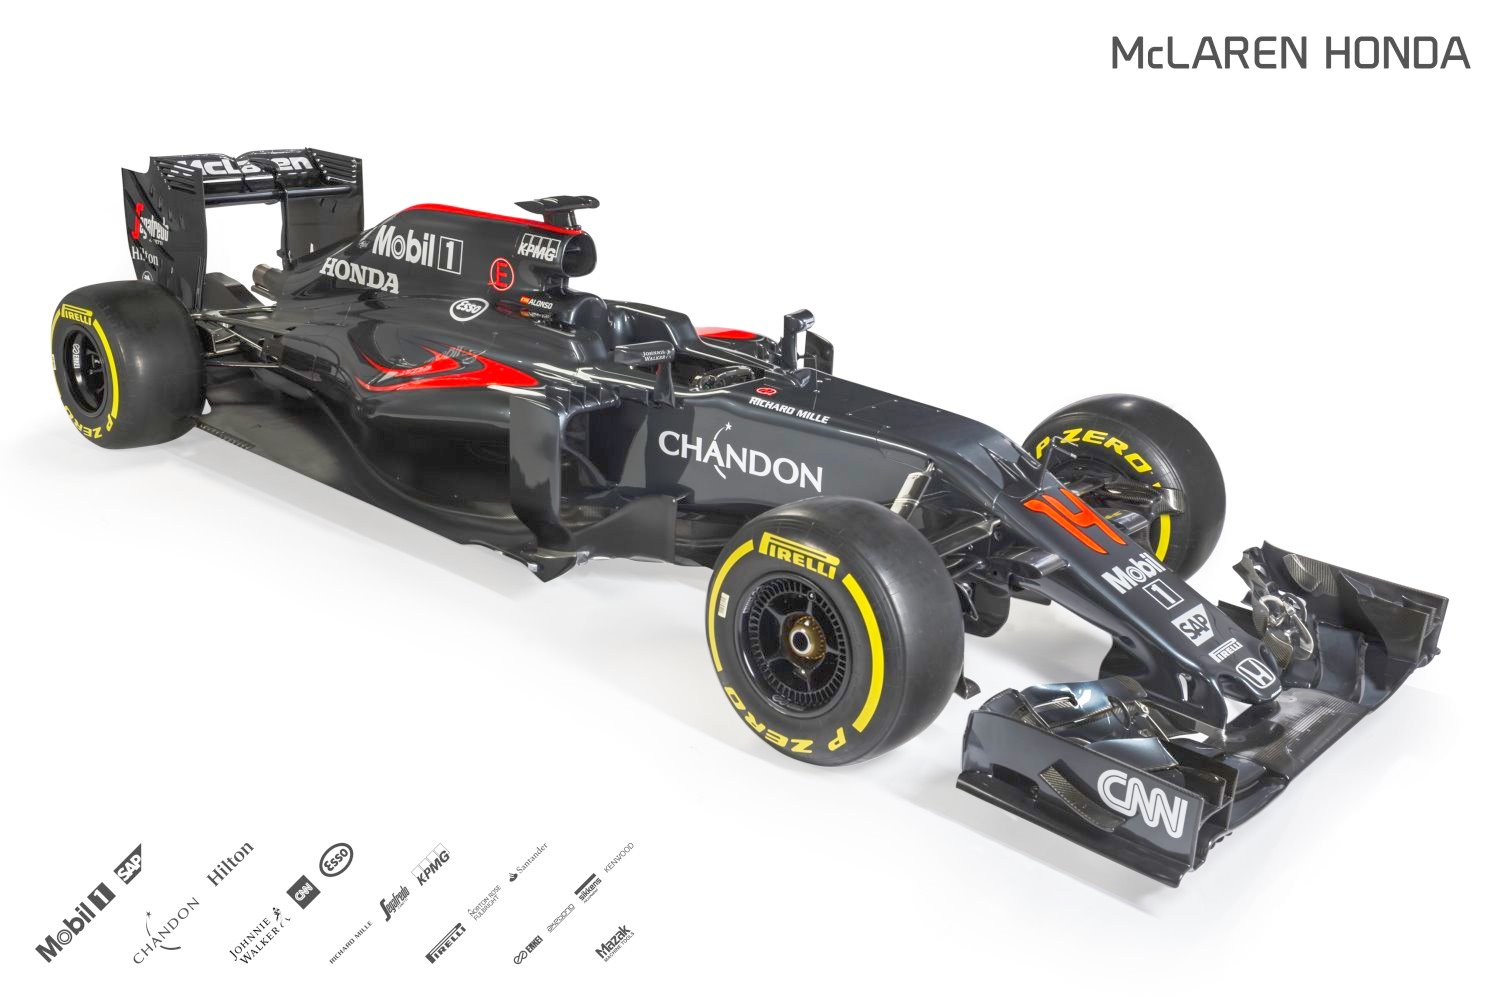 Can the new McLaren Honda win races?